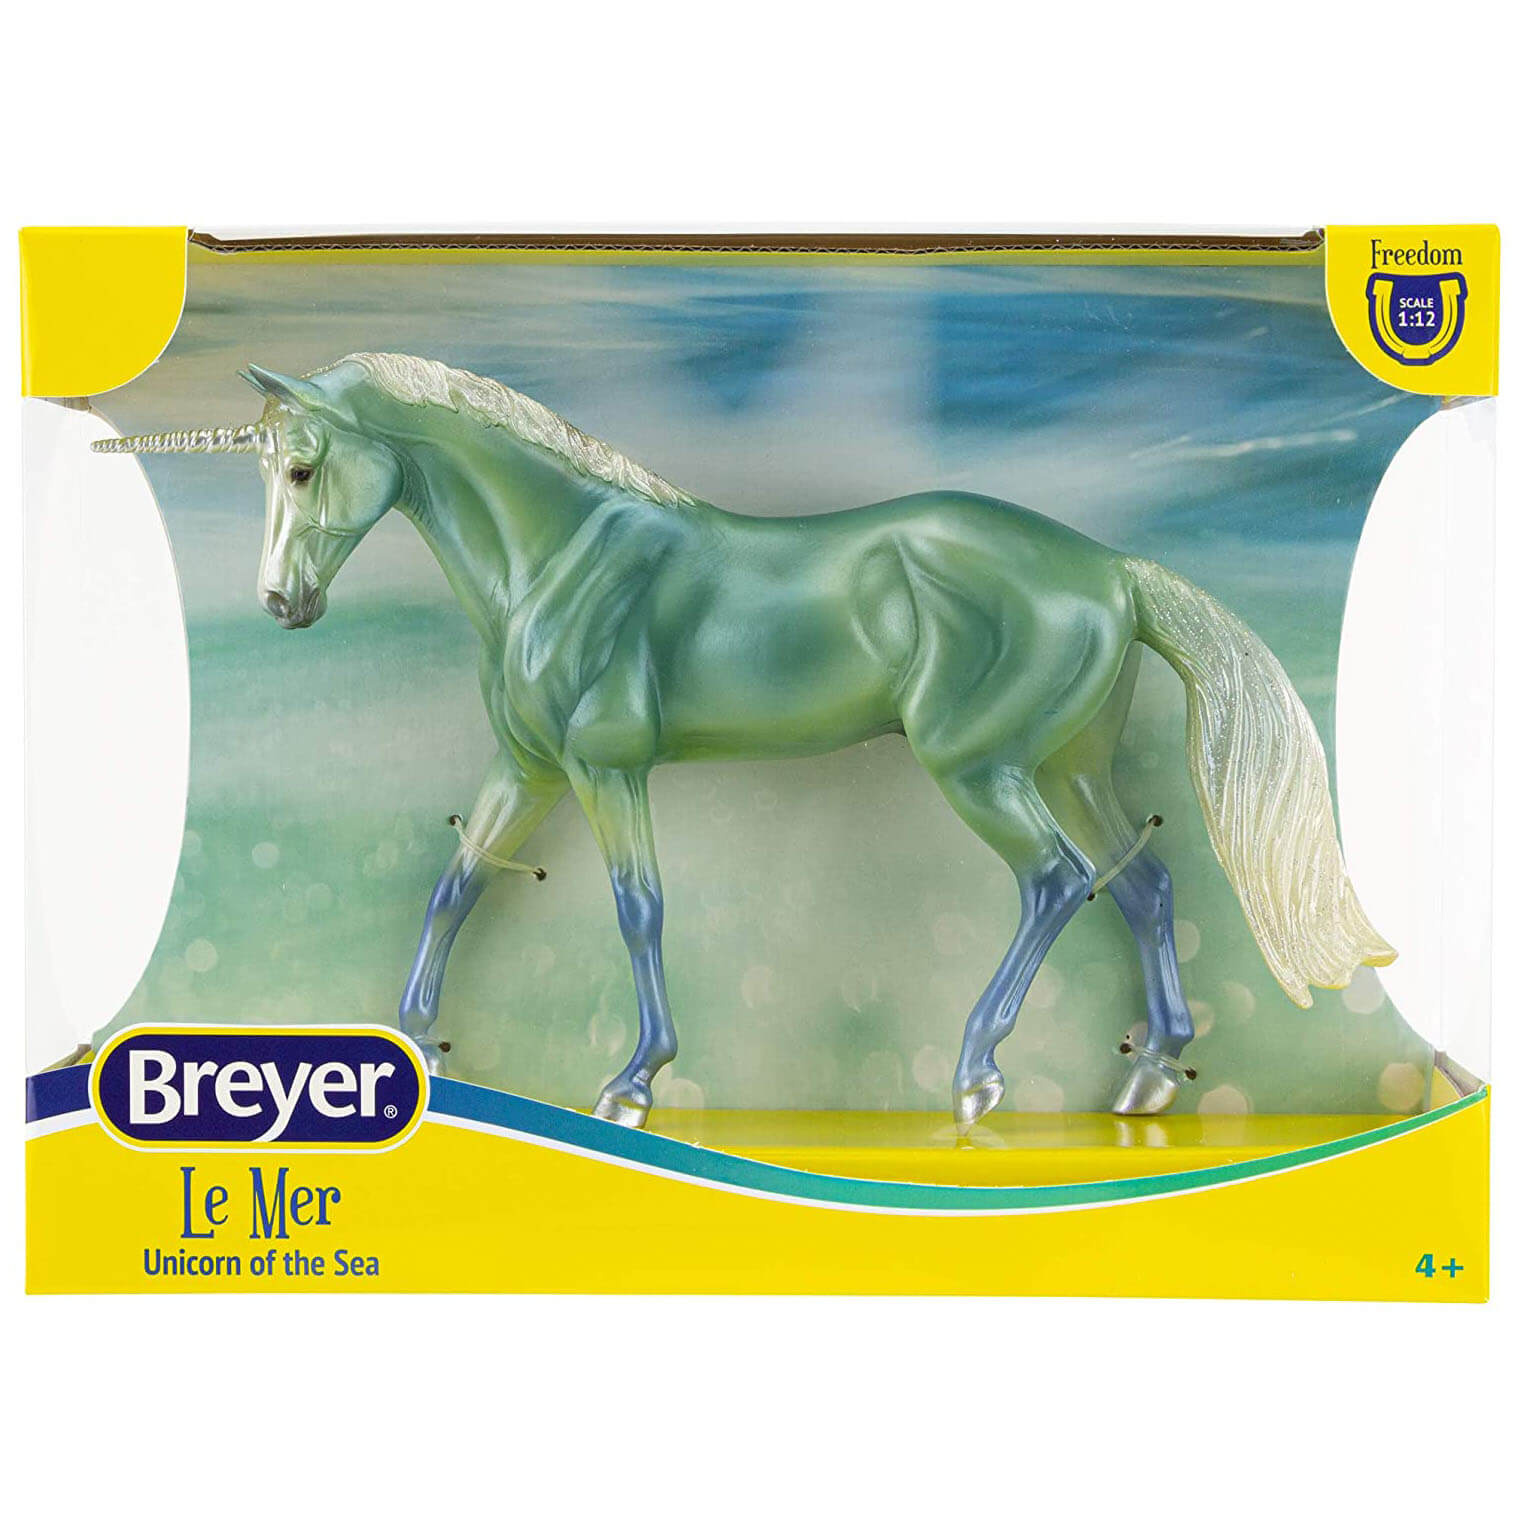 Breyer Freedom Series Le Mer Unicorn of the Sea